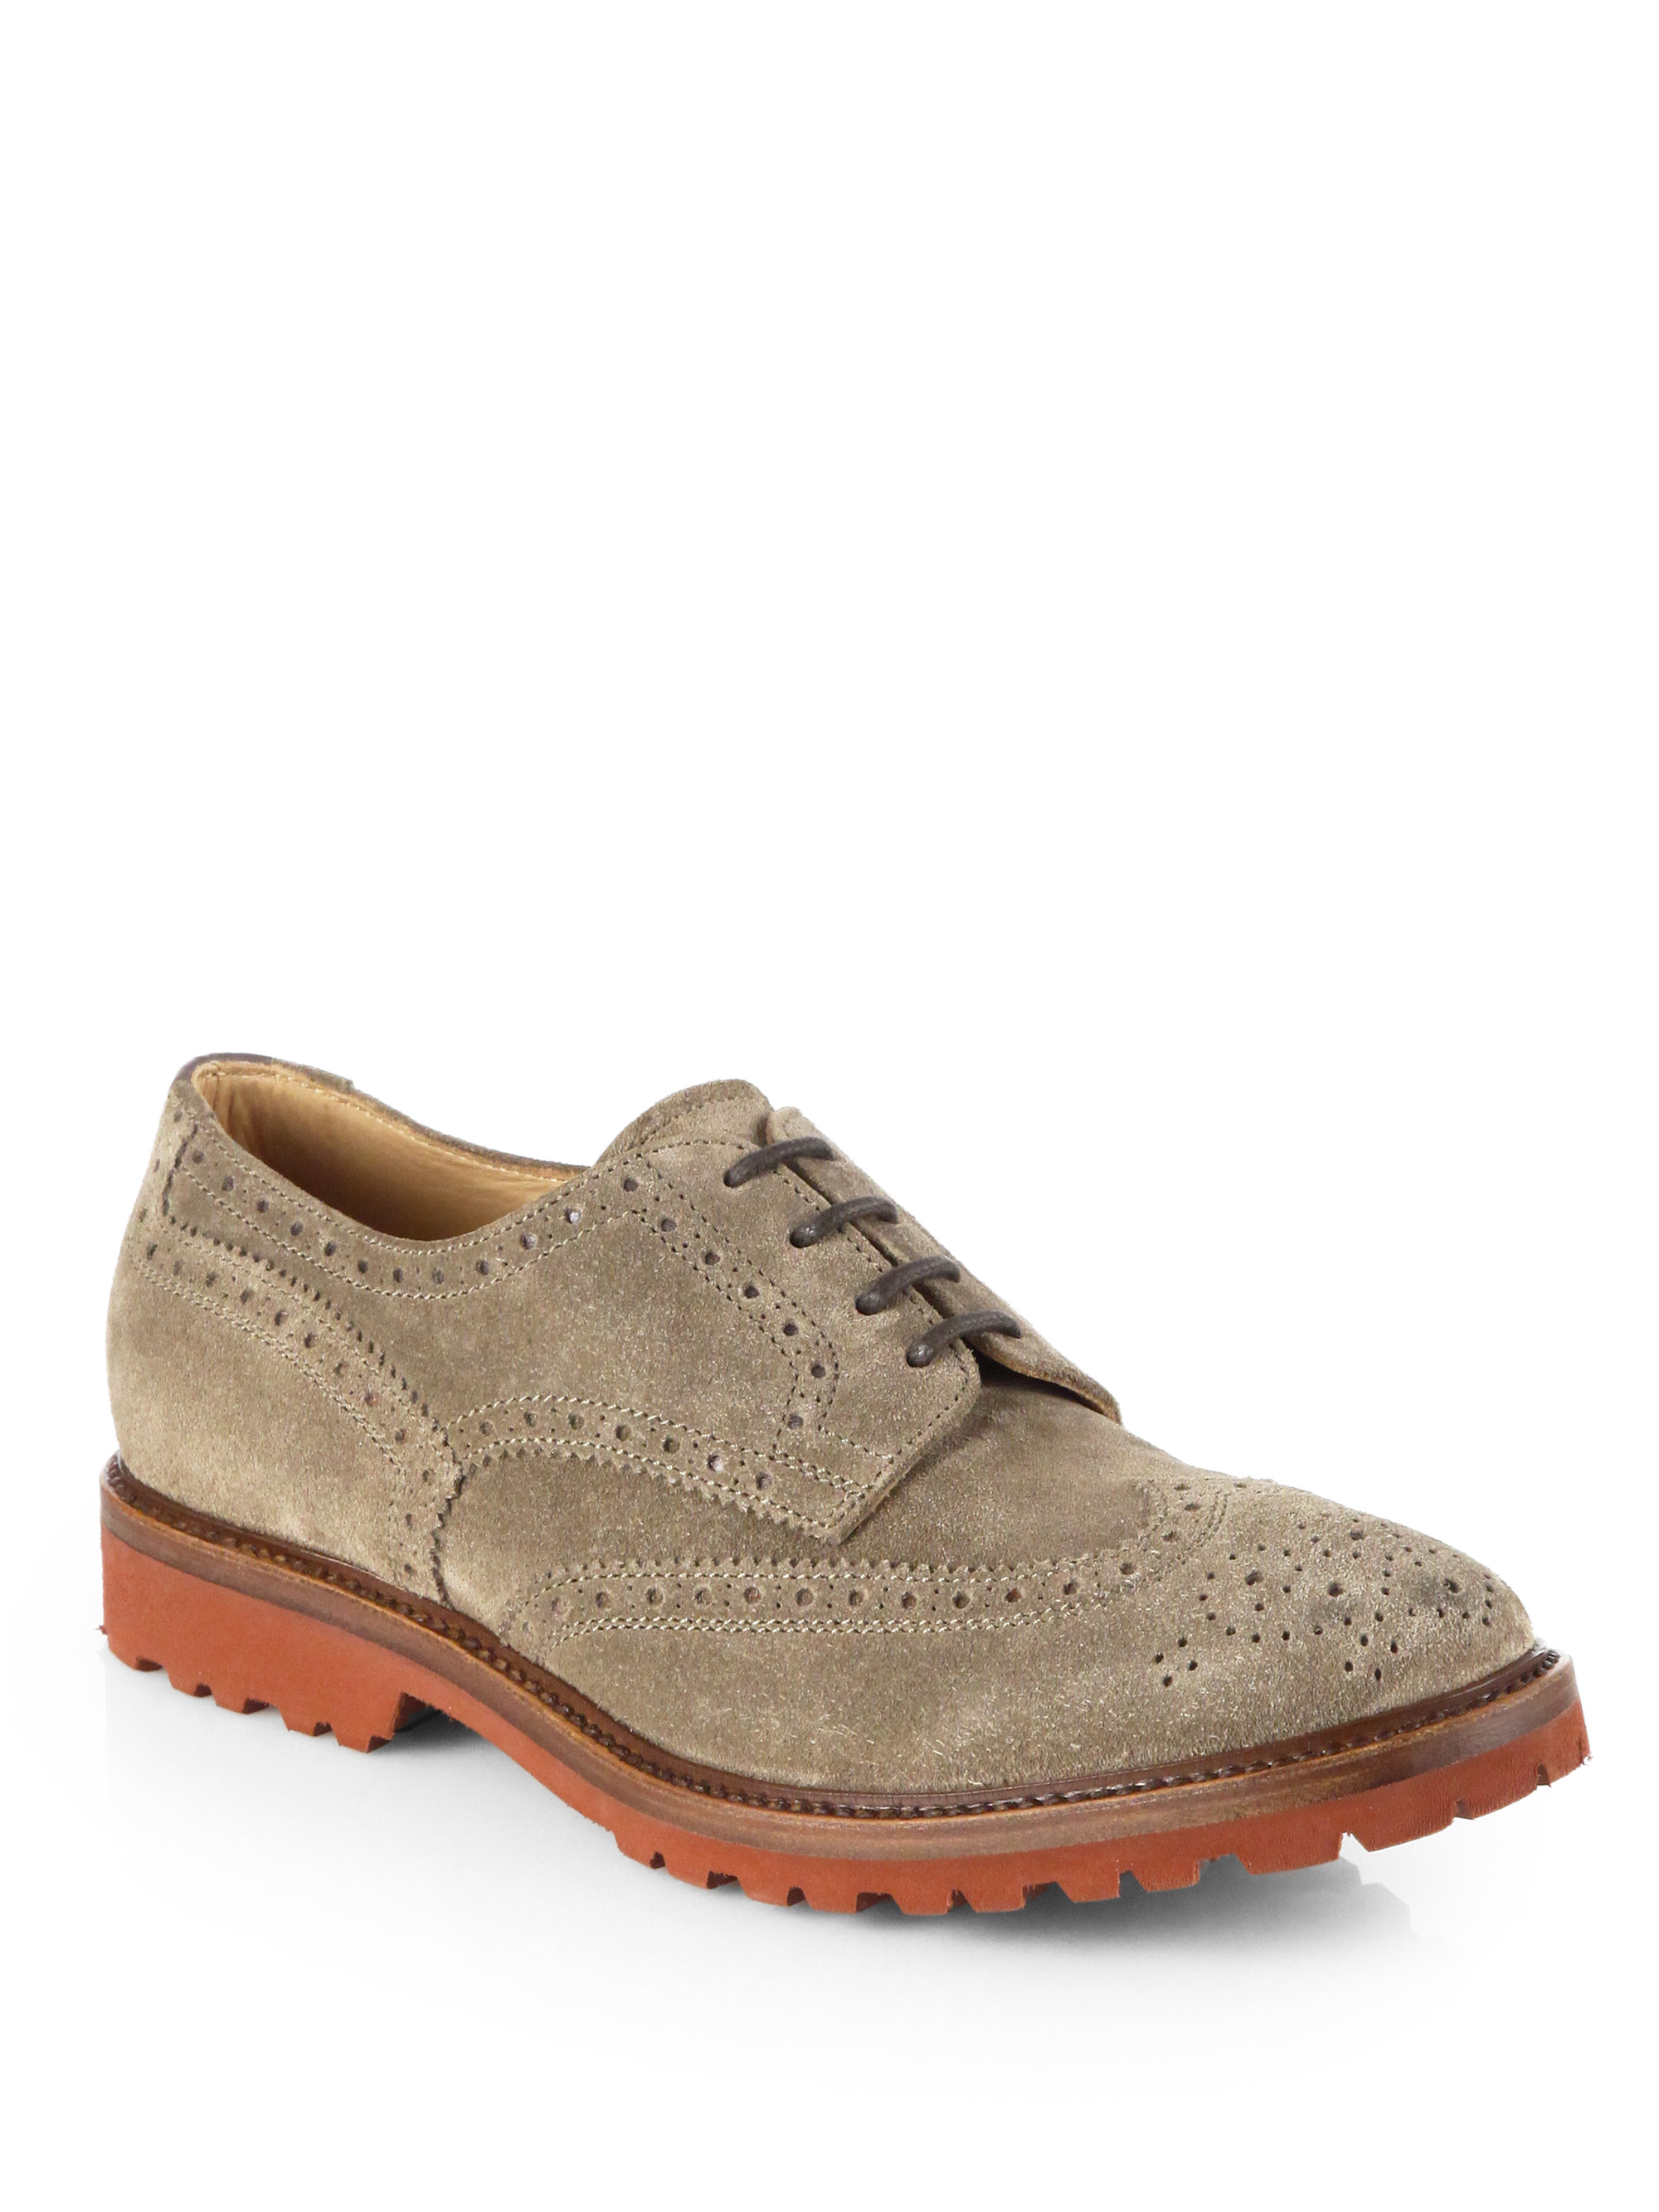 Brunello Cucinelli Suede Wingtip Derby Shoes In Brown For Men Lyst 7626